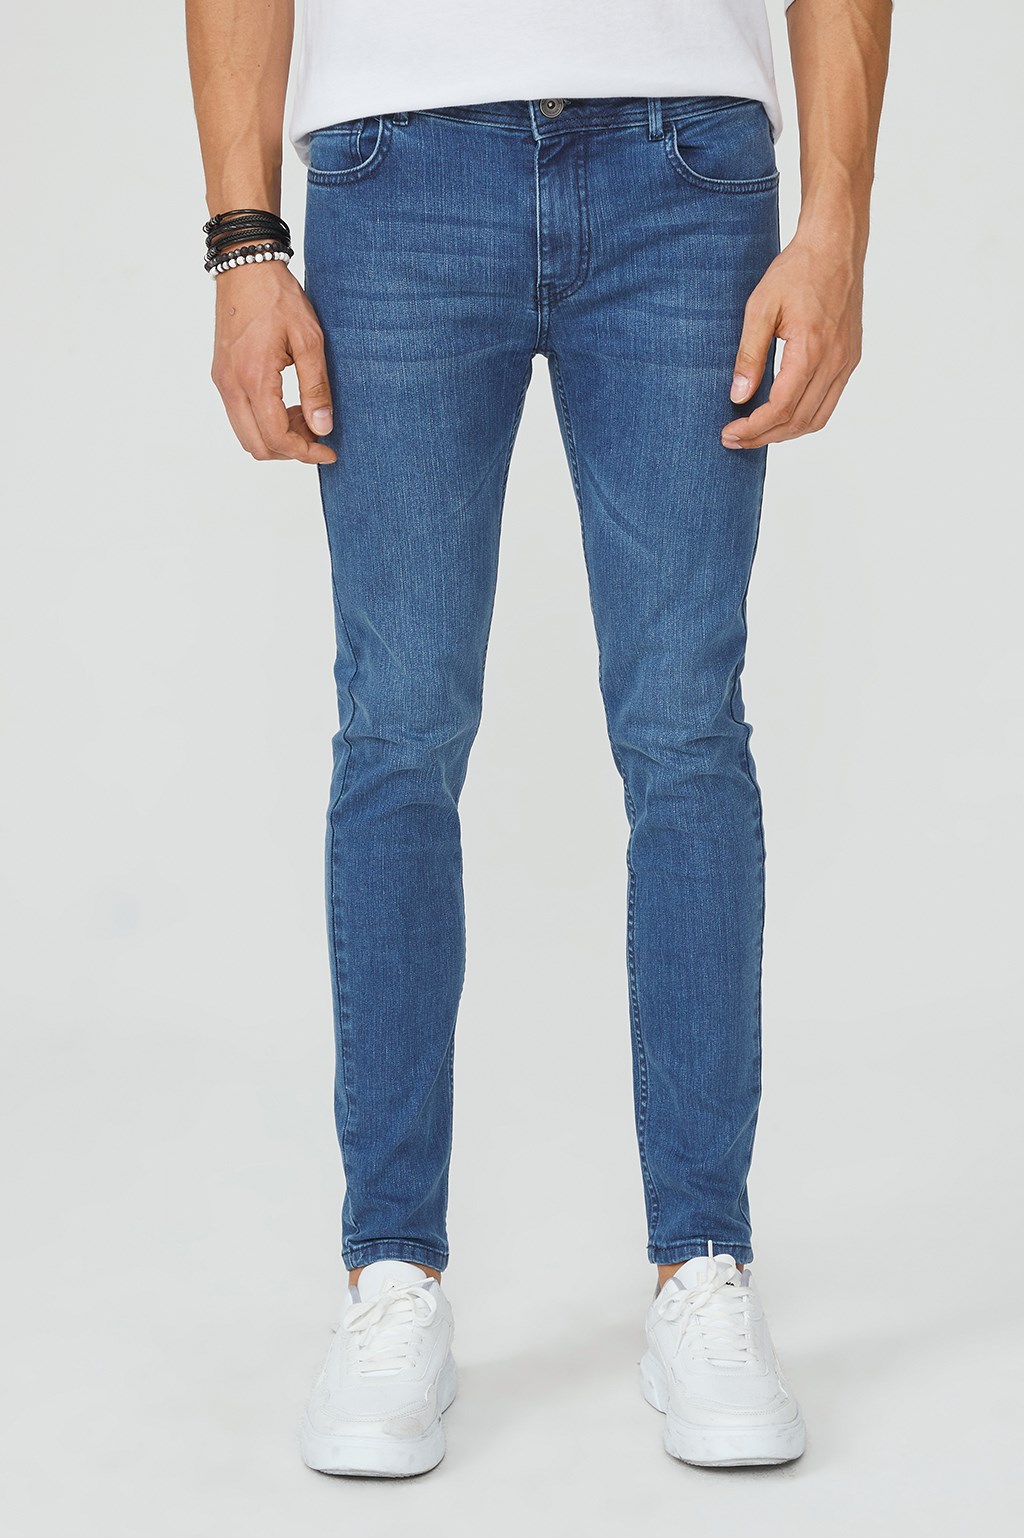 Mavi Skinny Fit Jean Pantolon A02Y3589-02 - AVVA